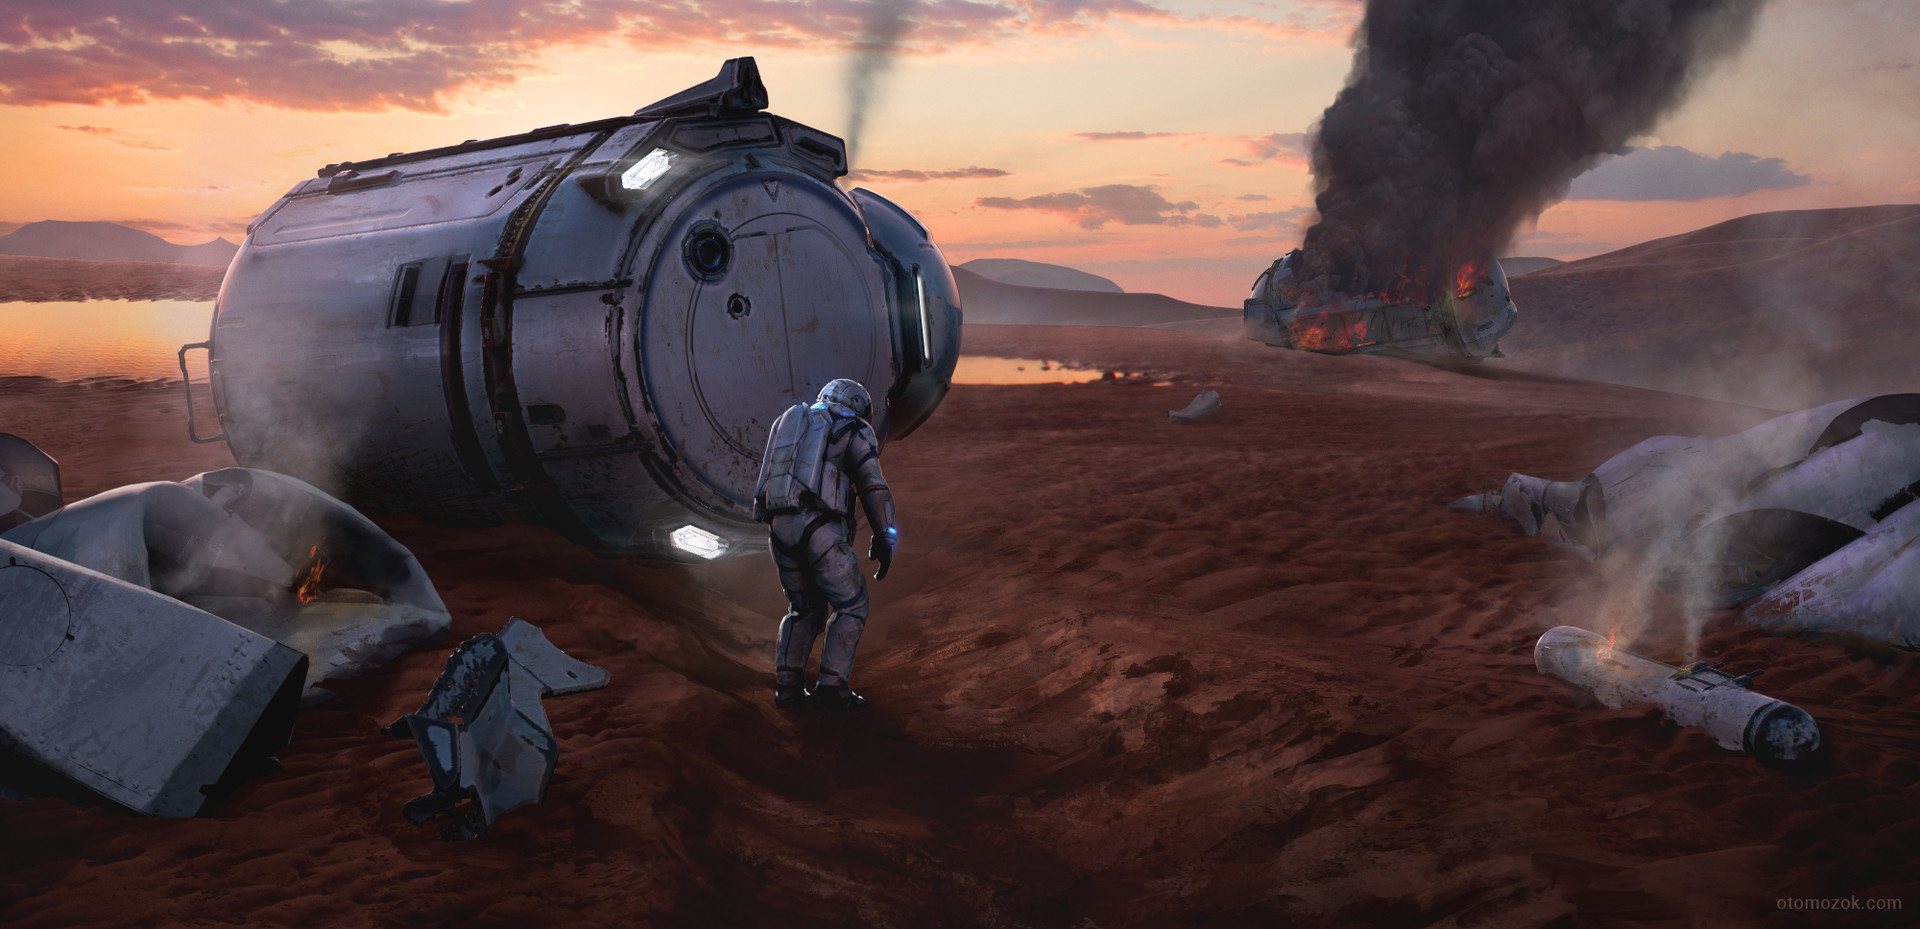 Chrash-landing on Mars by Arthur Gurin | human Mars